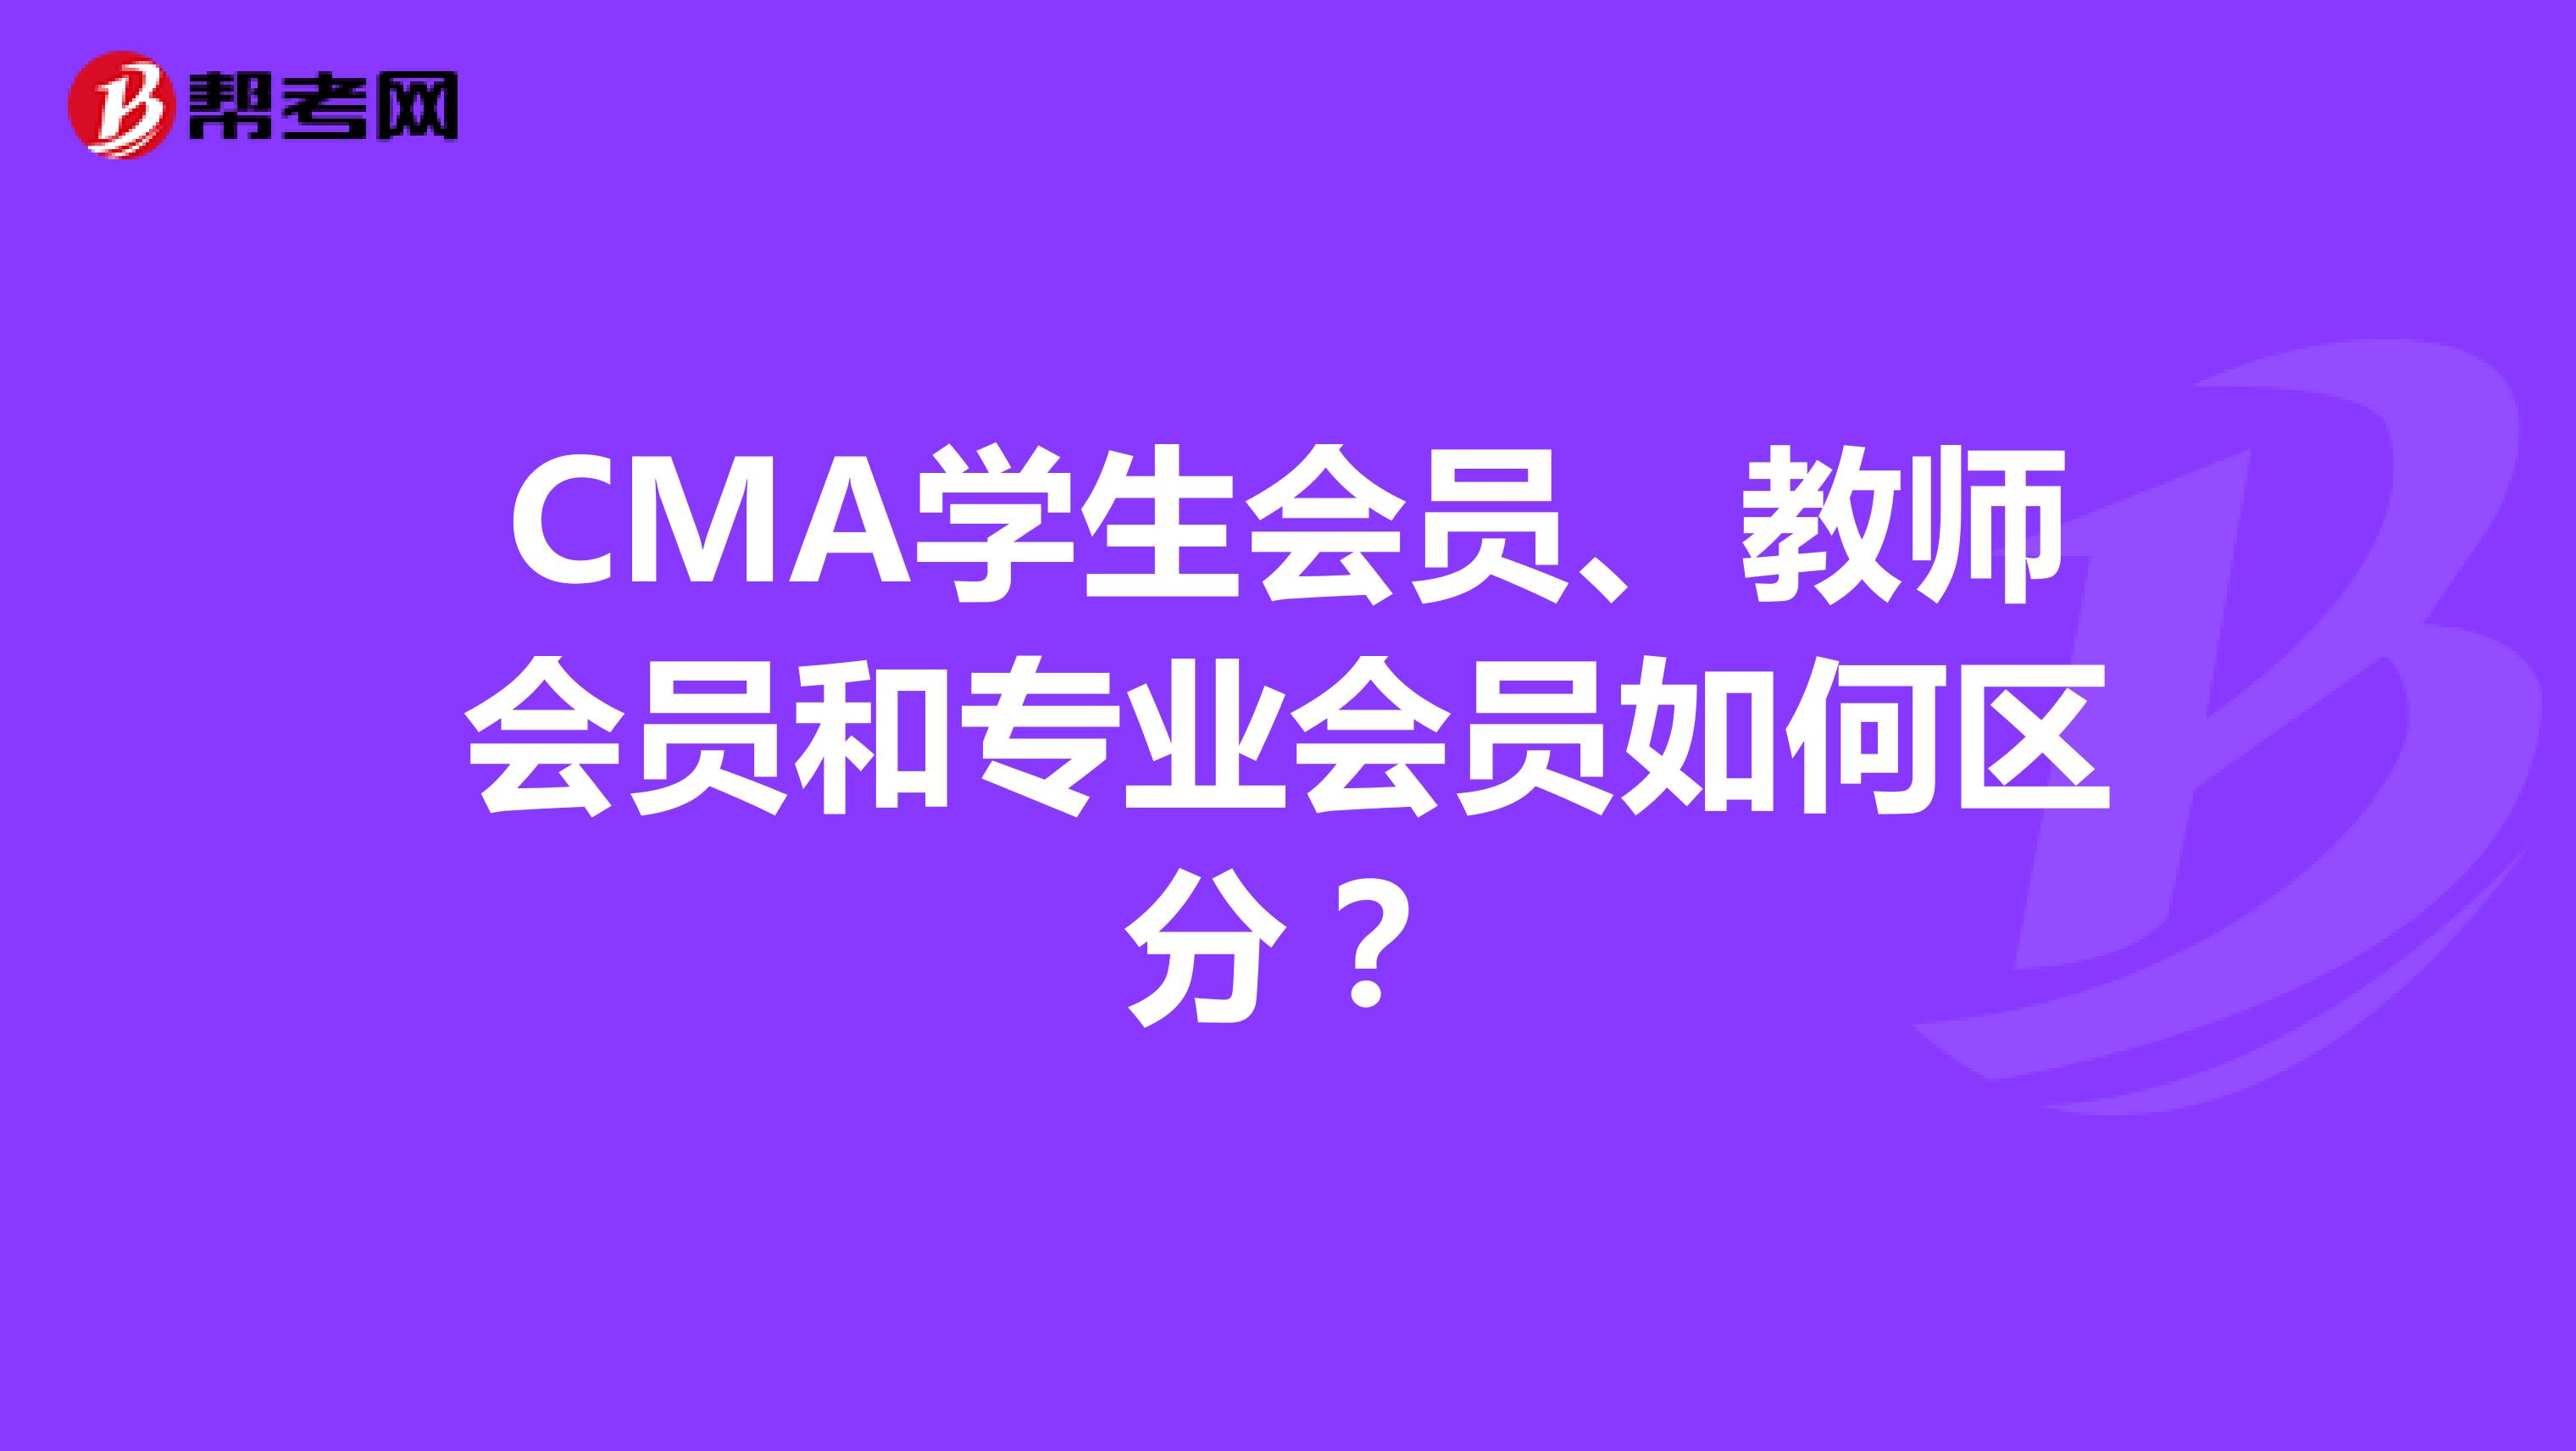 CMA学生会员、教师会员和专业会员如何区分？